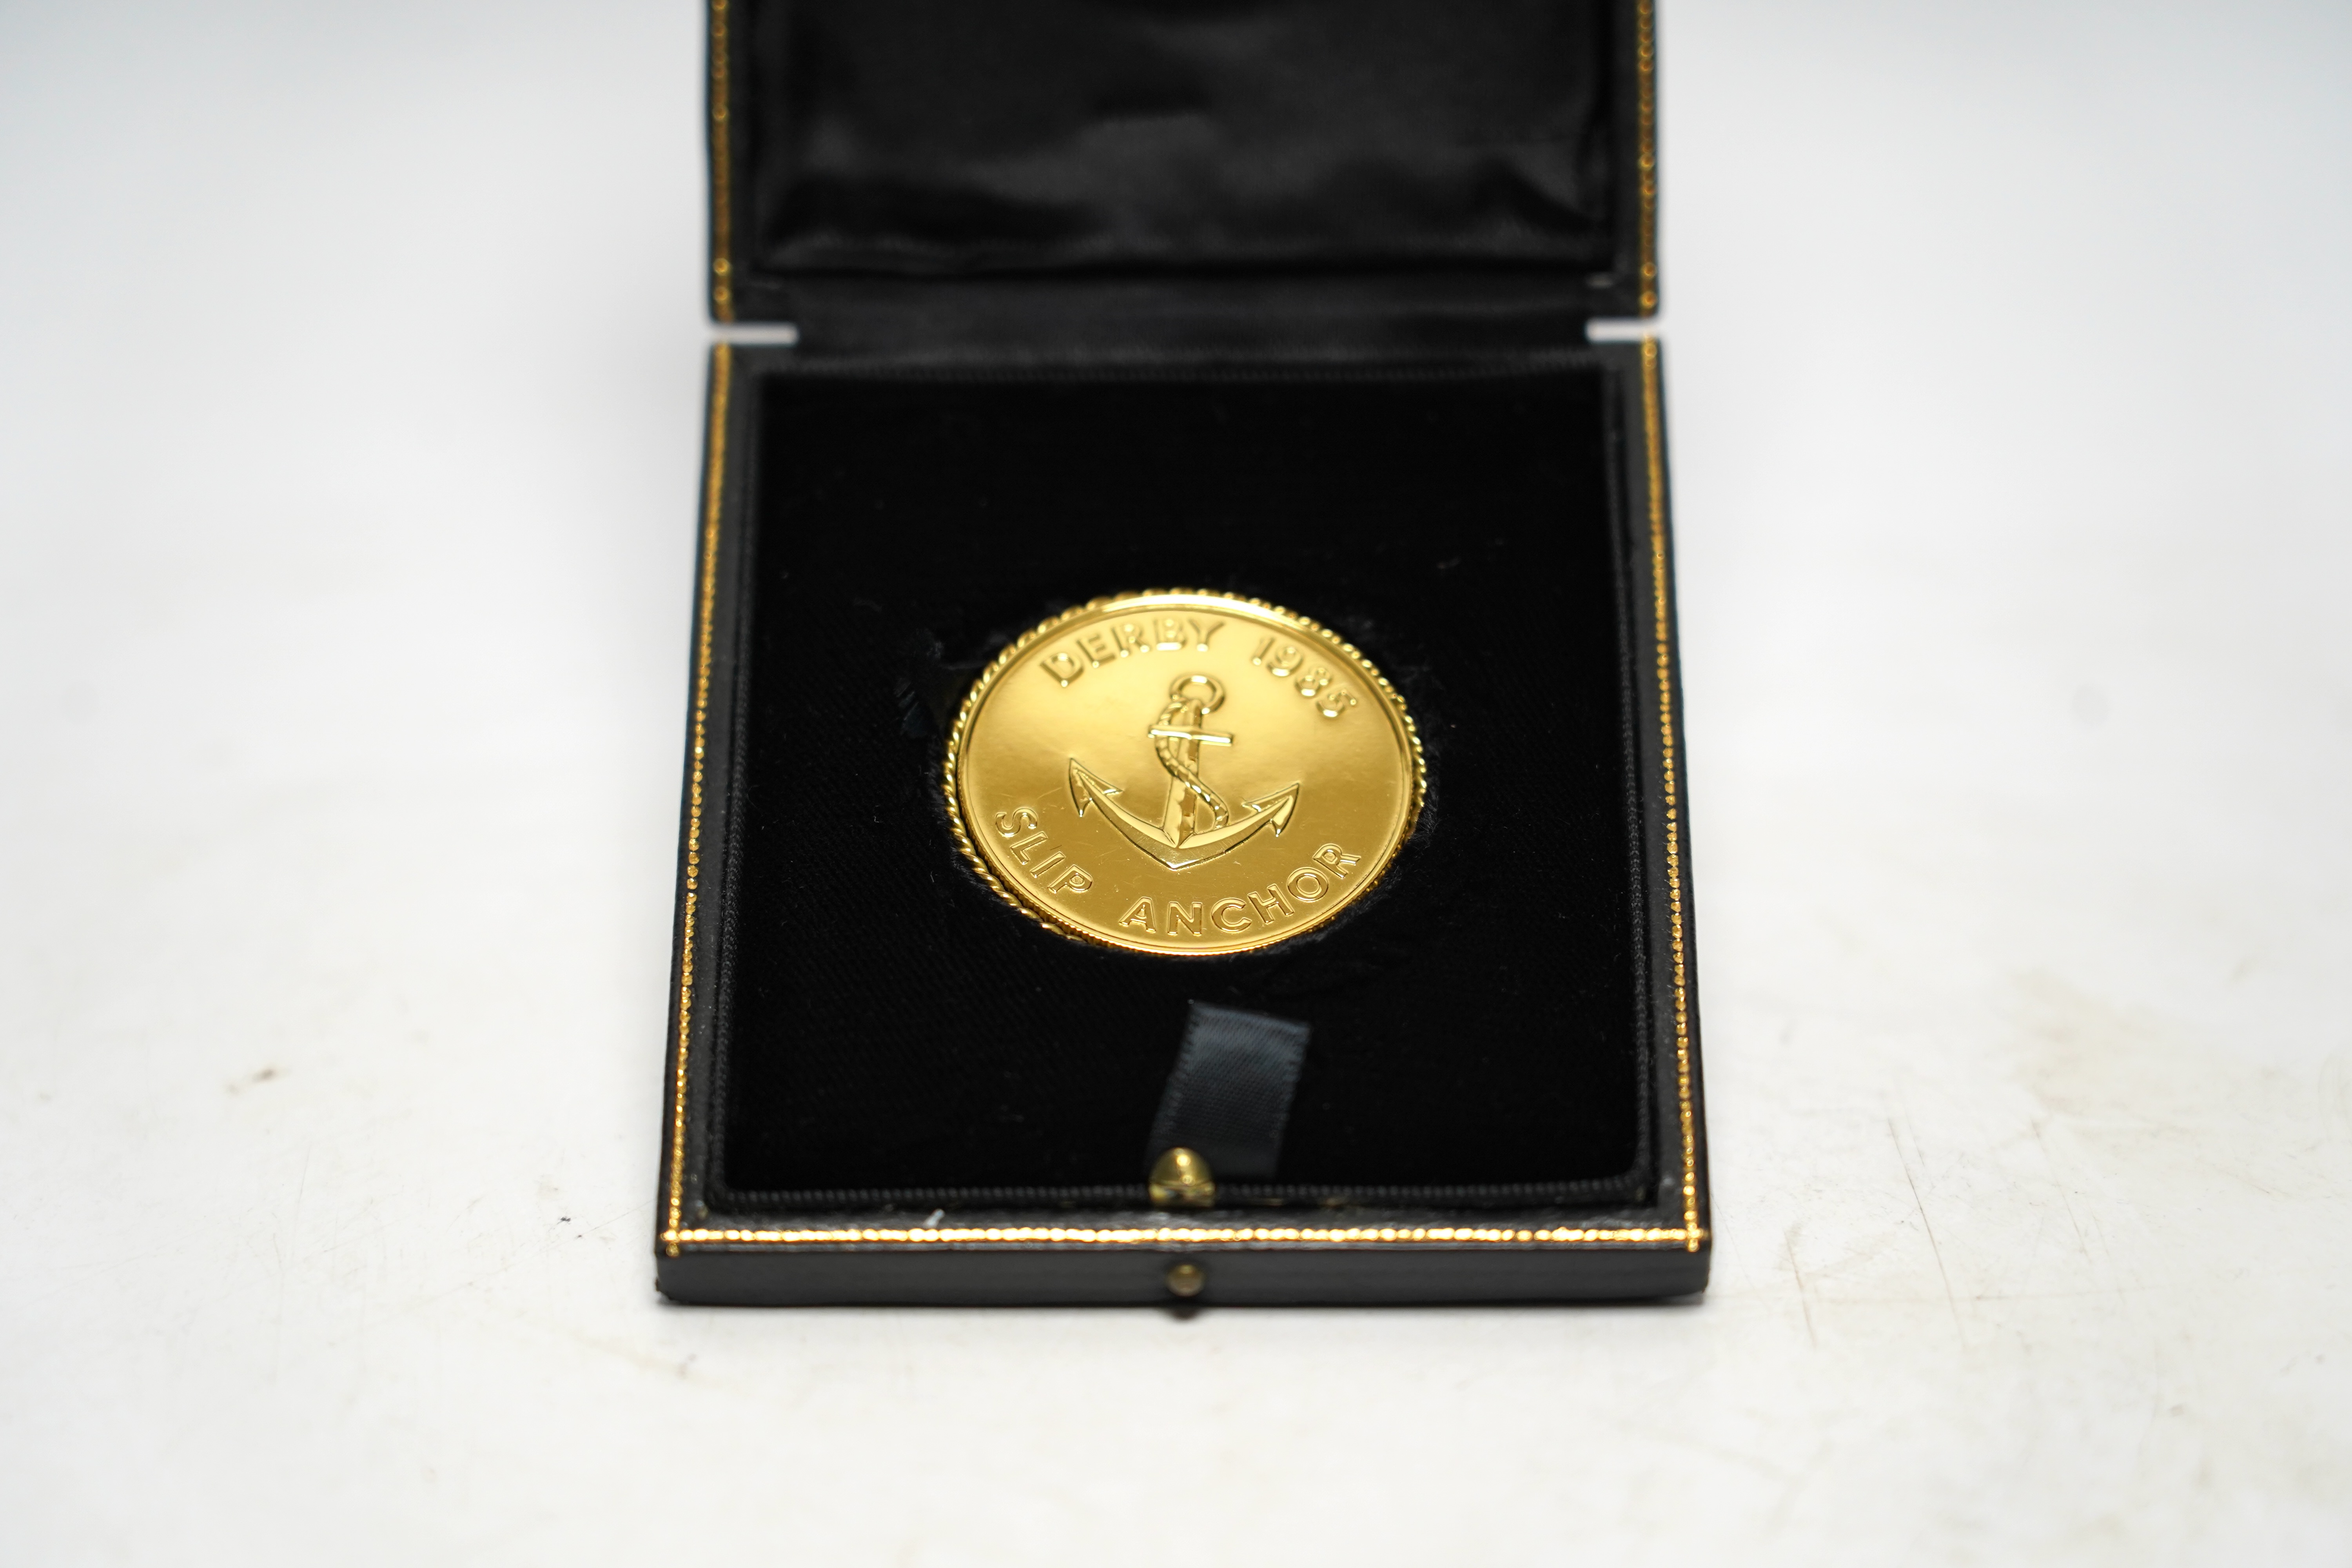 A Lord Howard de Walden medal commemorating Slip Anchor, Derby, 1985, in Cartier box.